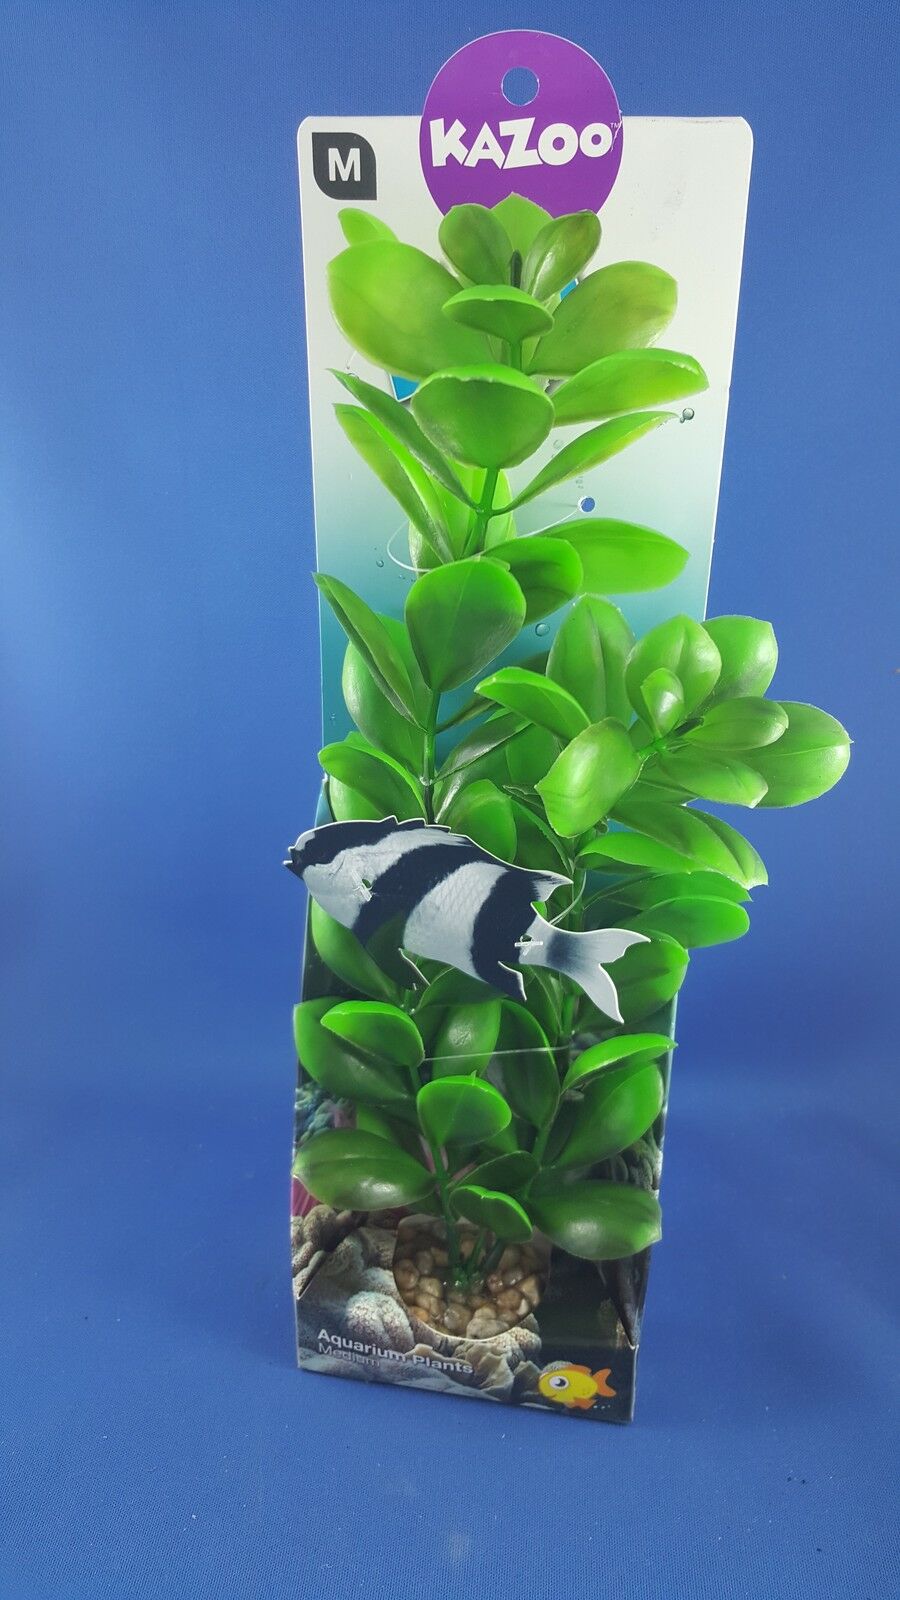 Kazoo aquarium plant, medium with green round leaves with solid pebble base